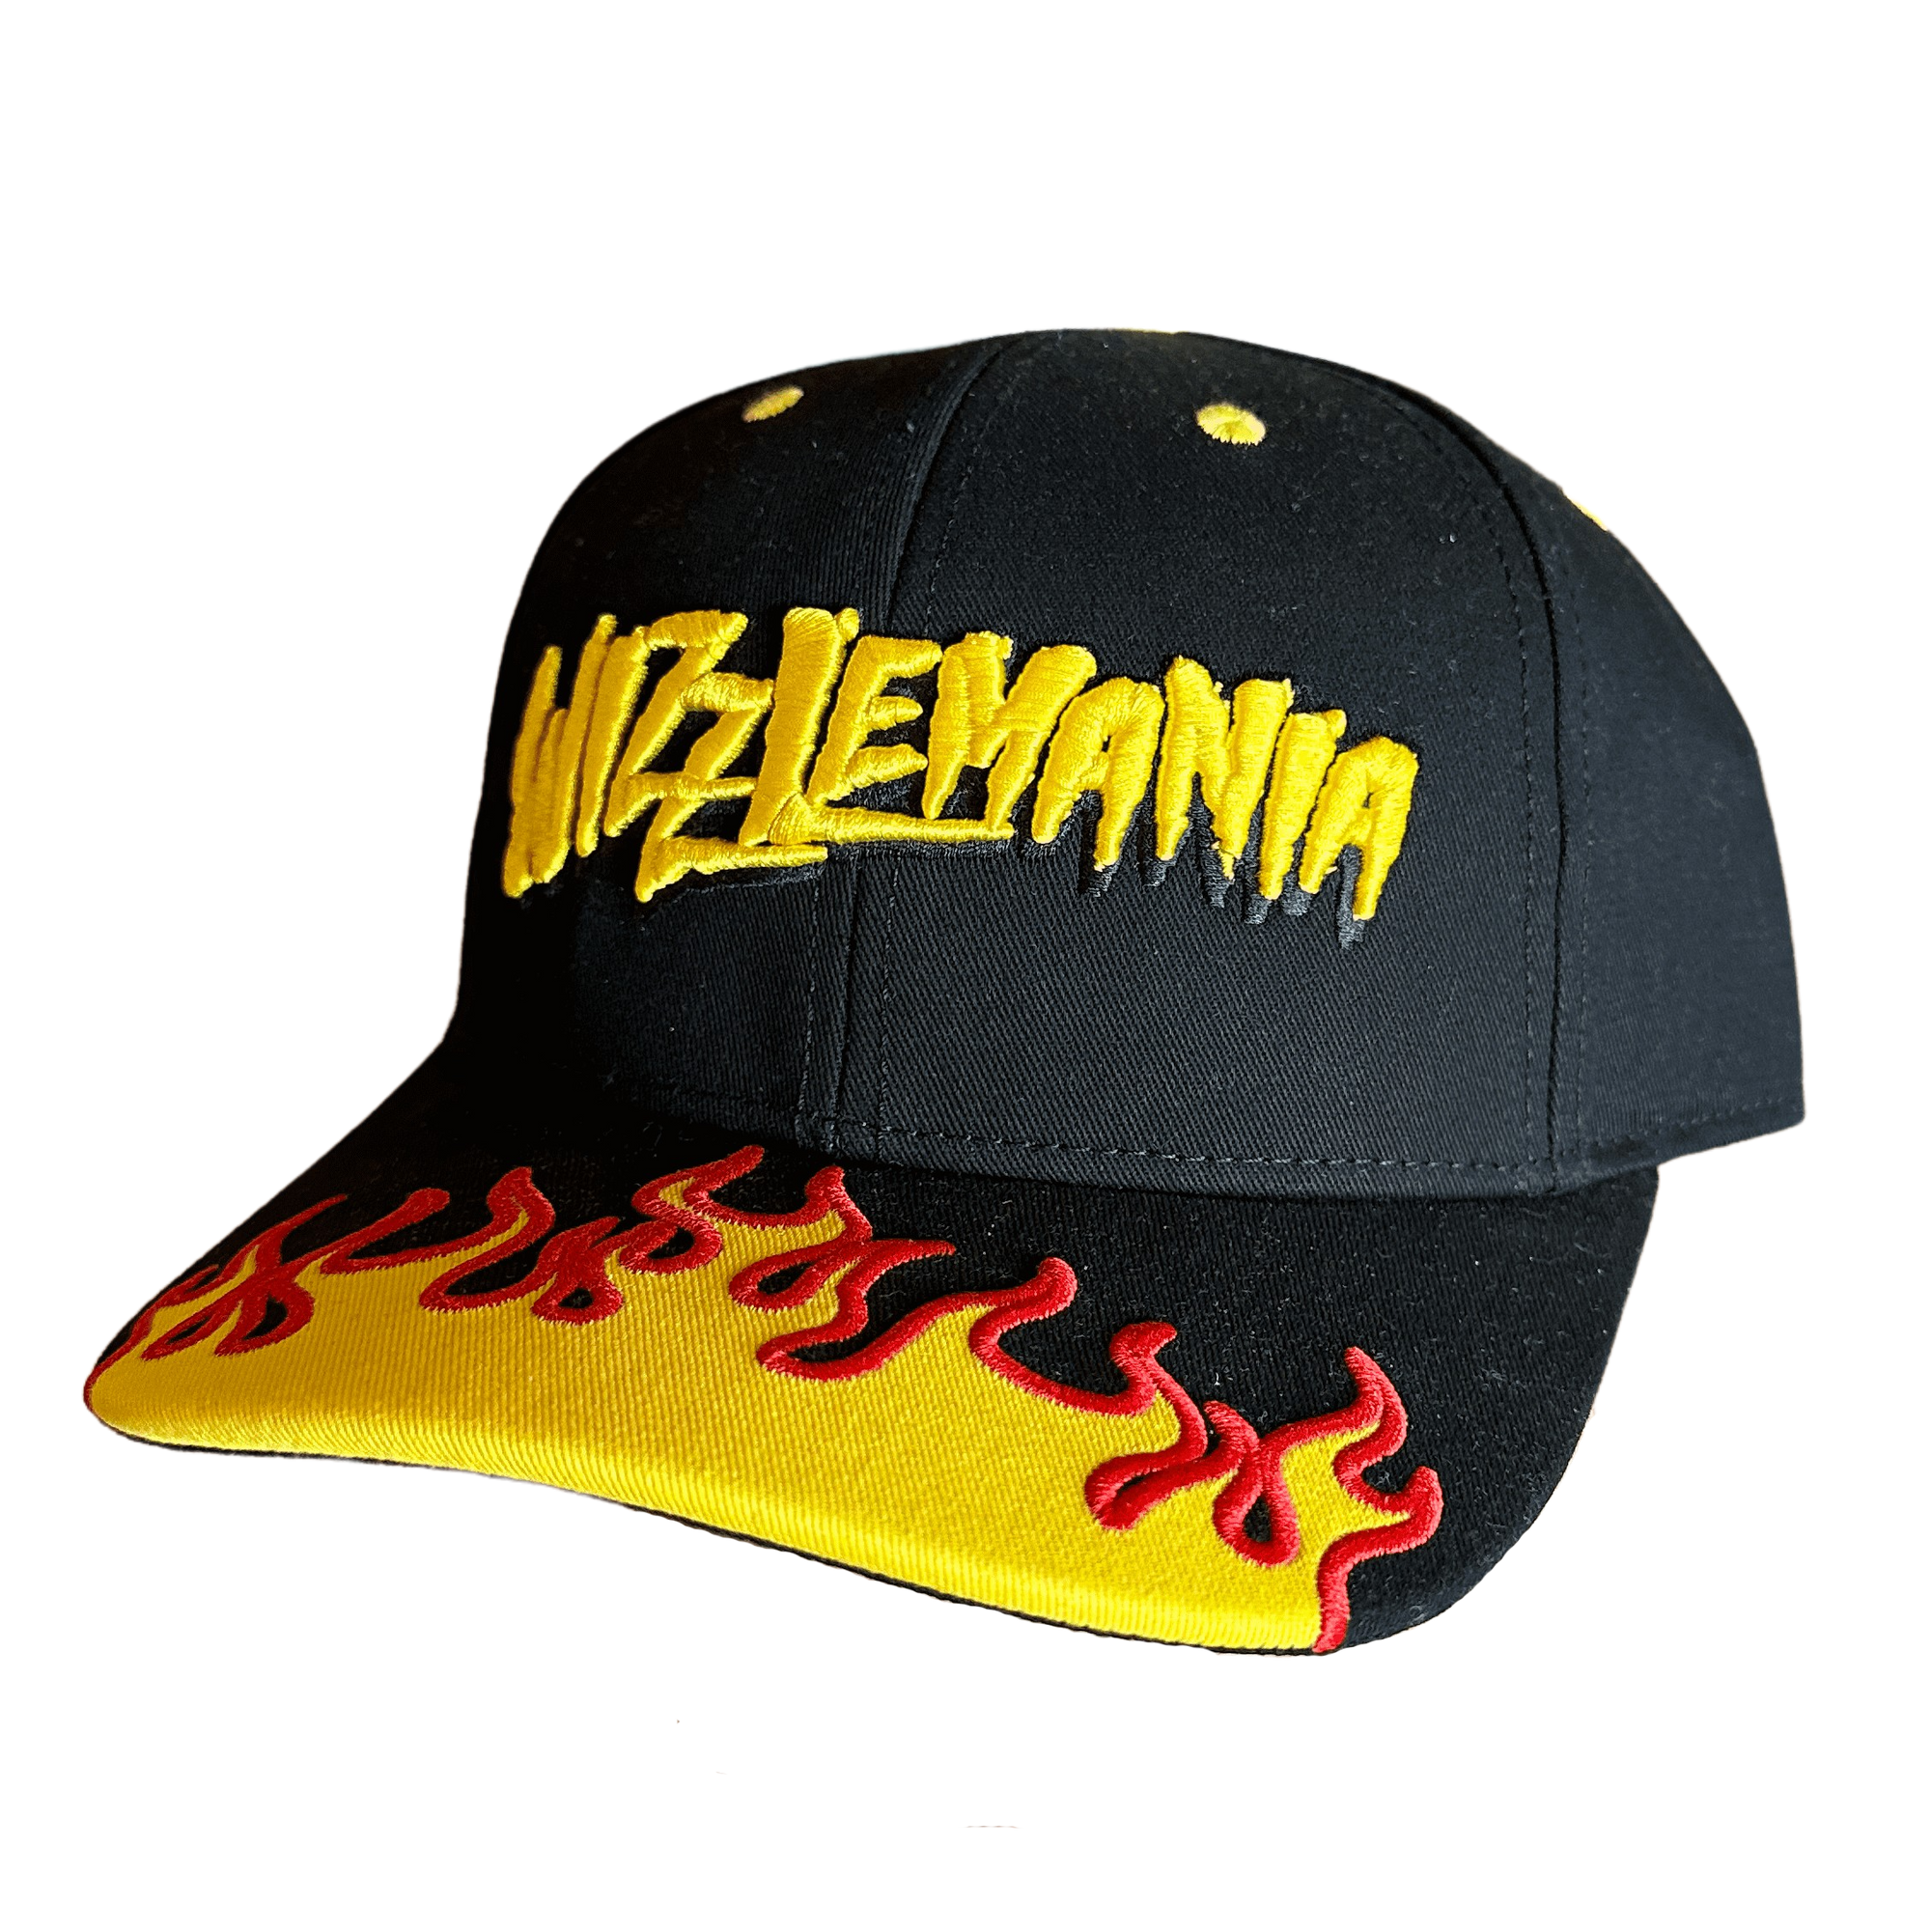 Wizzlemania Hat